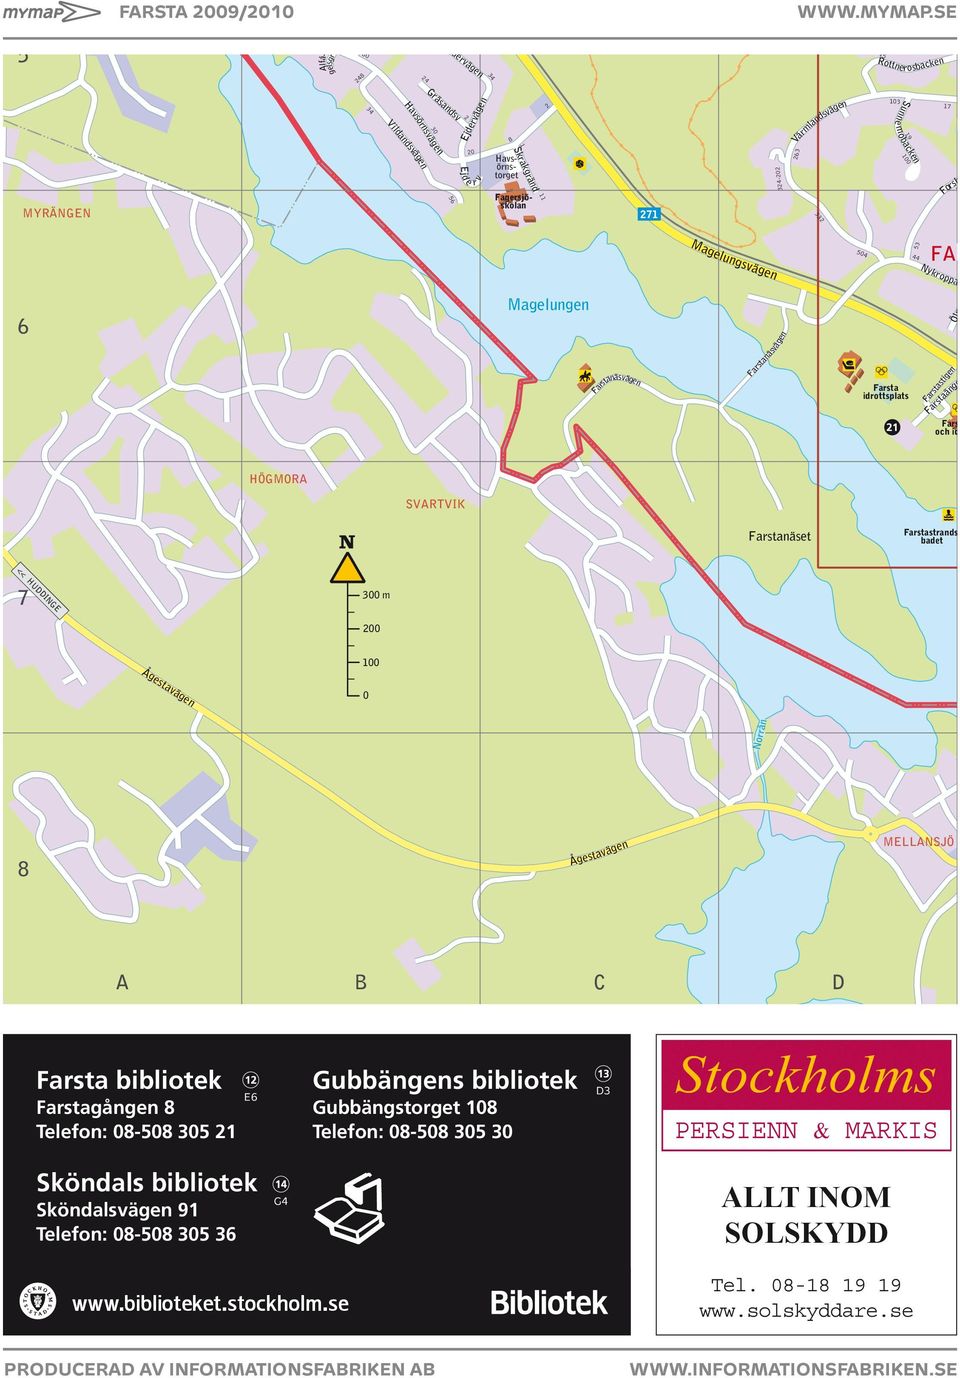 Stockholms PERSIENN & MARKIS Sköndals bibliotek Sköndalsvägen 91 Telefon: